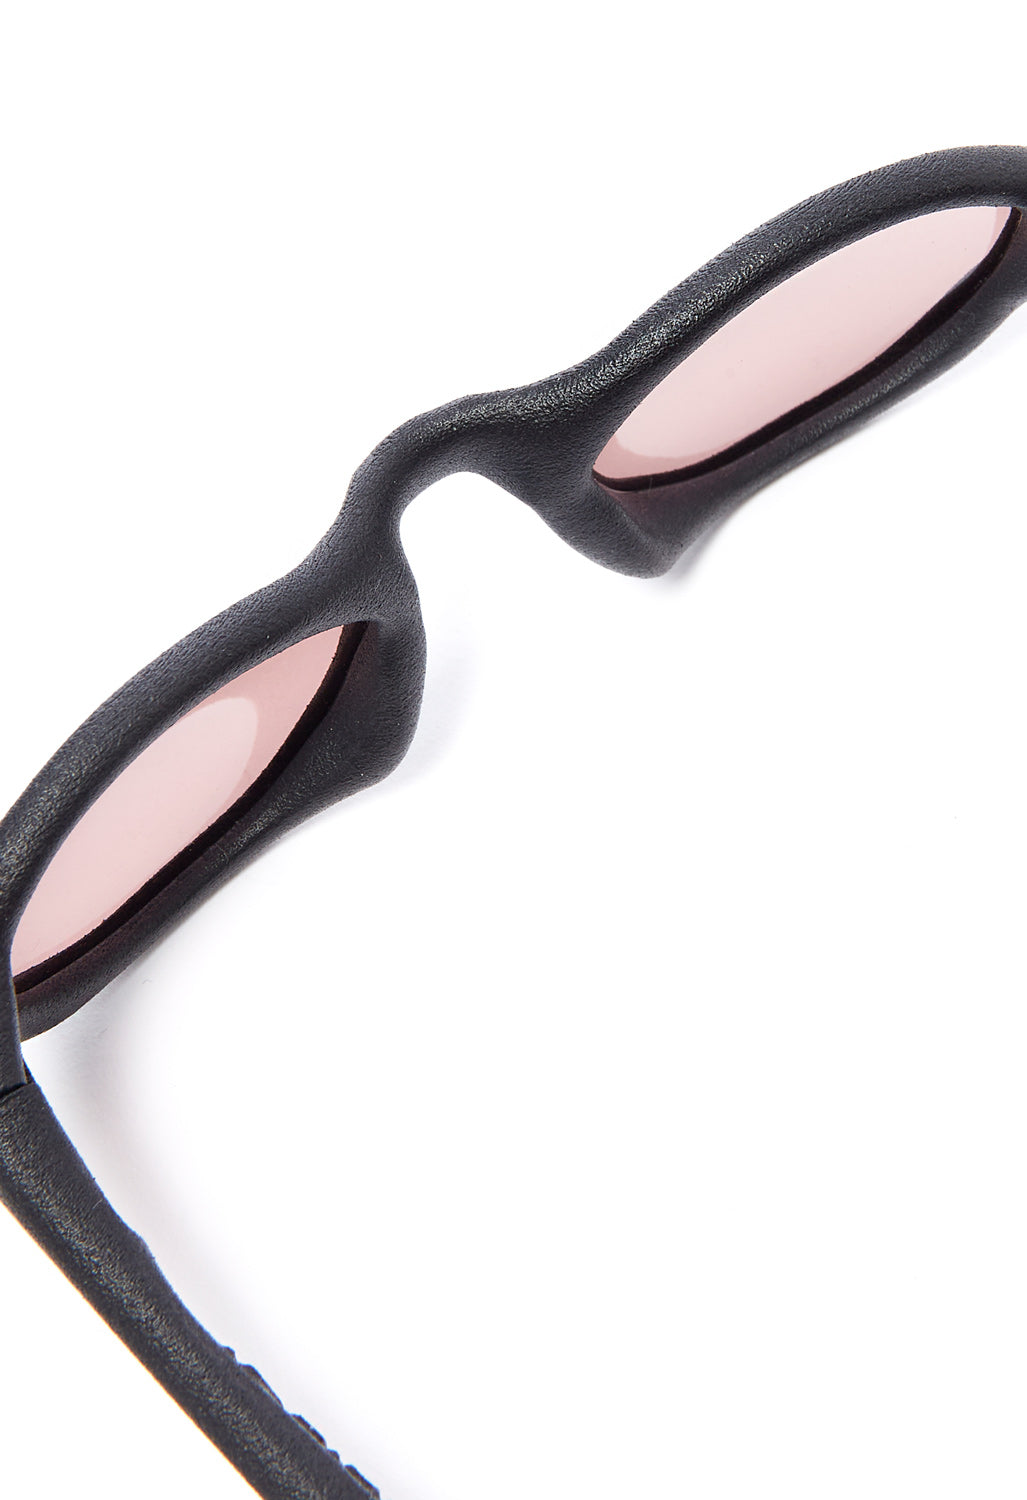 Rayon Vert Wormholes Sunglasses - Vulcanic Black – Outsiders Store UK